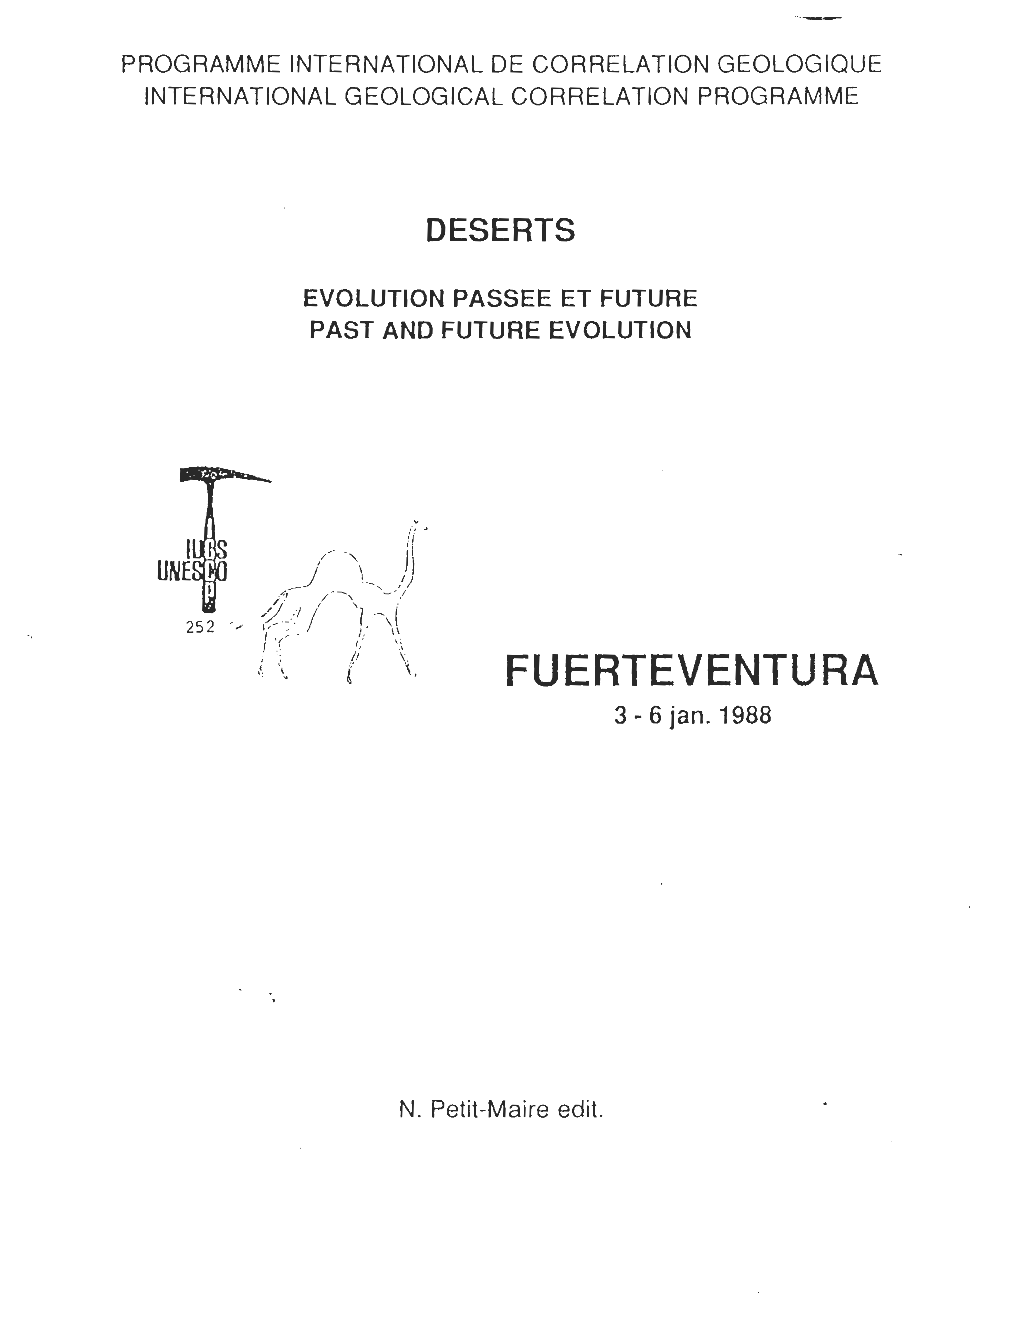 The Archaeological Site of "Cueva De Villaverde" (Fuerteventura)